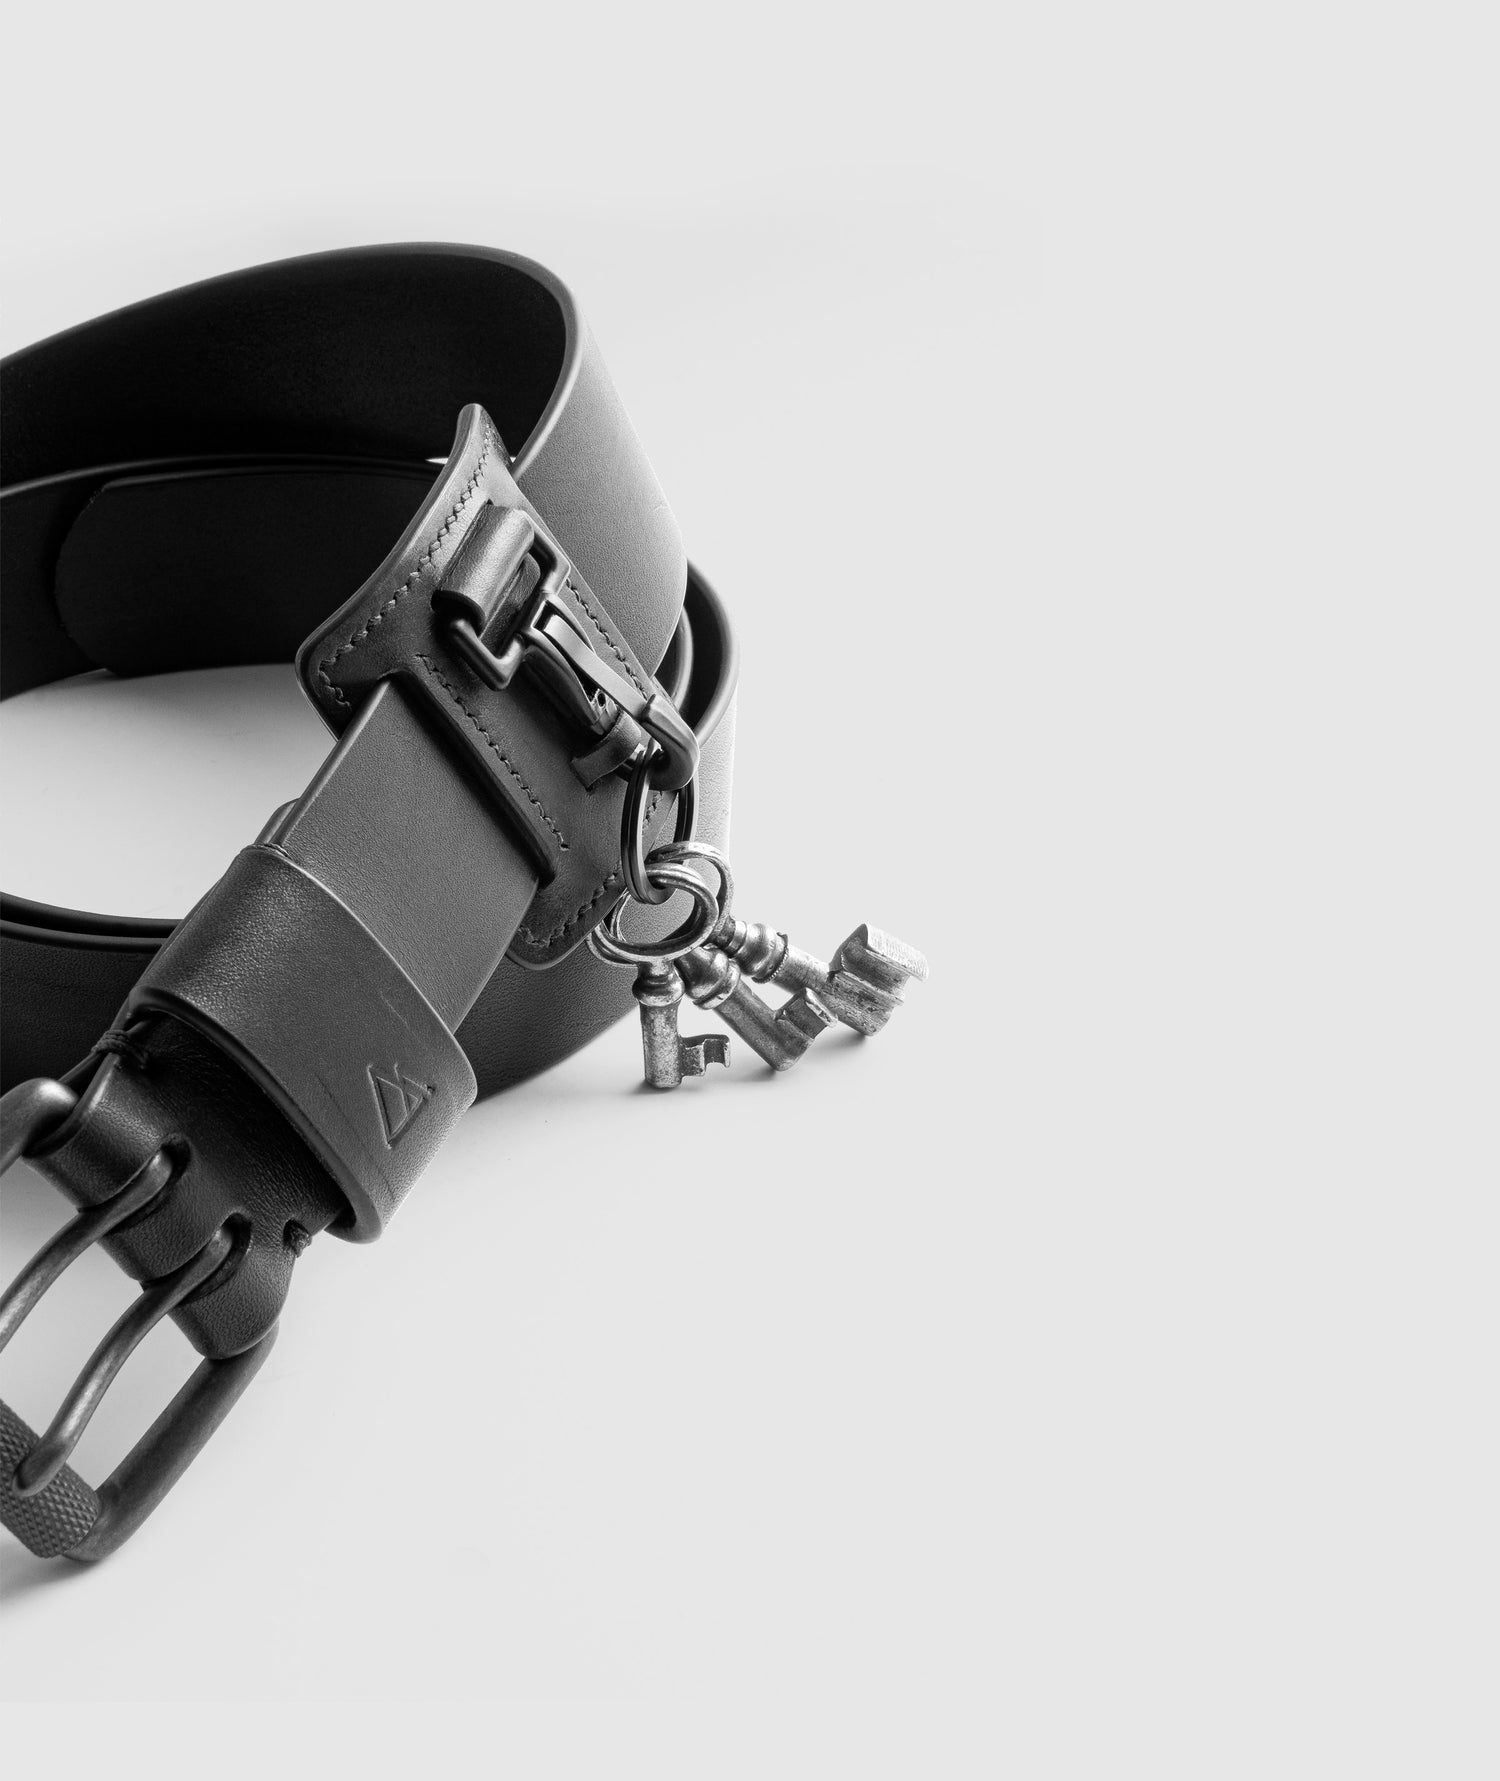 Black handmade leather belt keychain by darksails - porte clefs de ceinture faite main en cuir noir